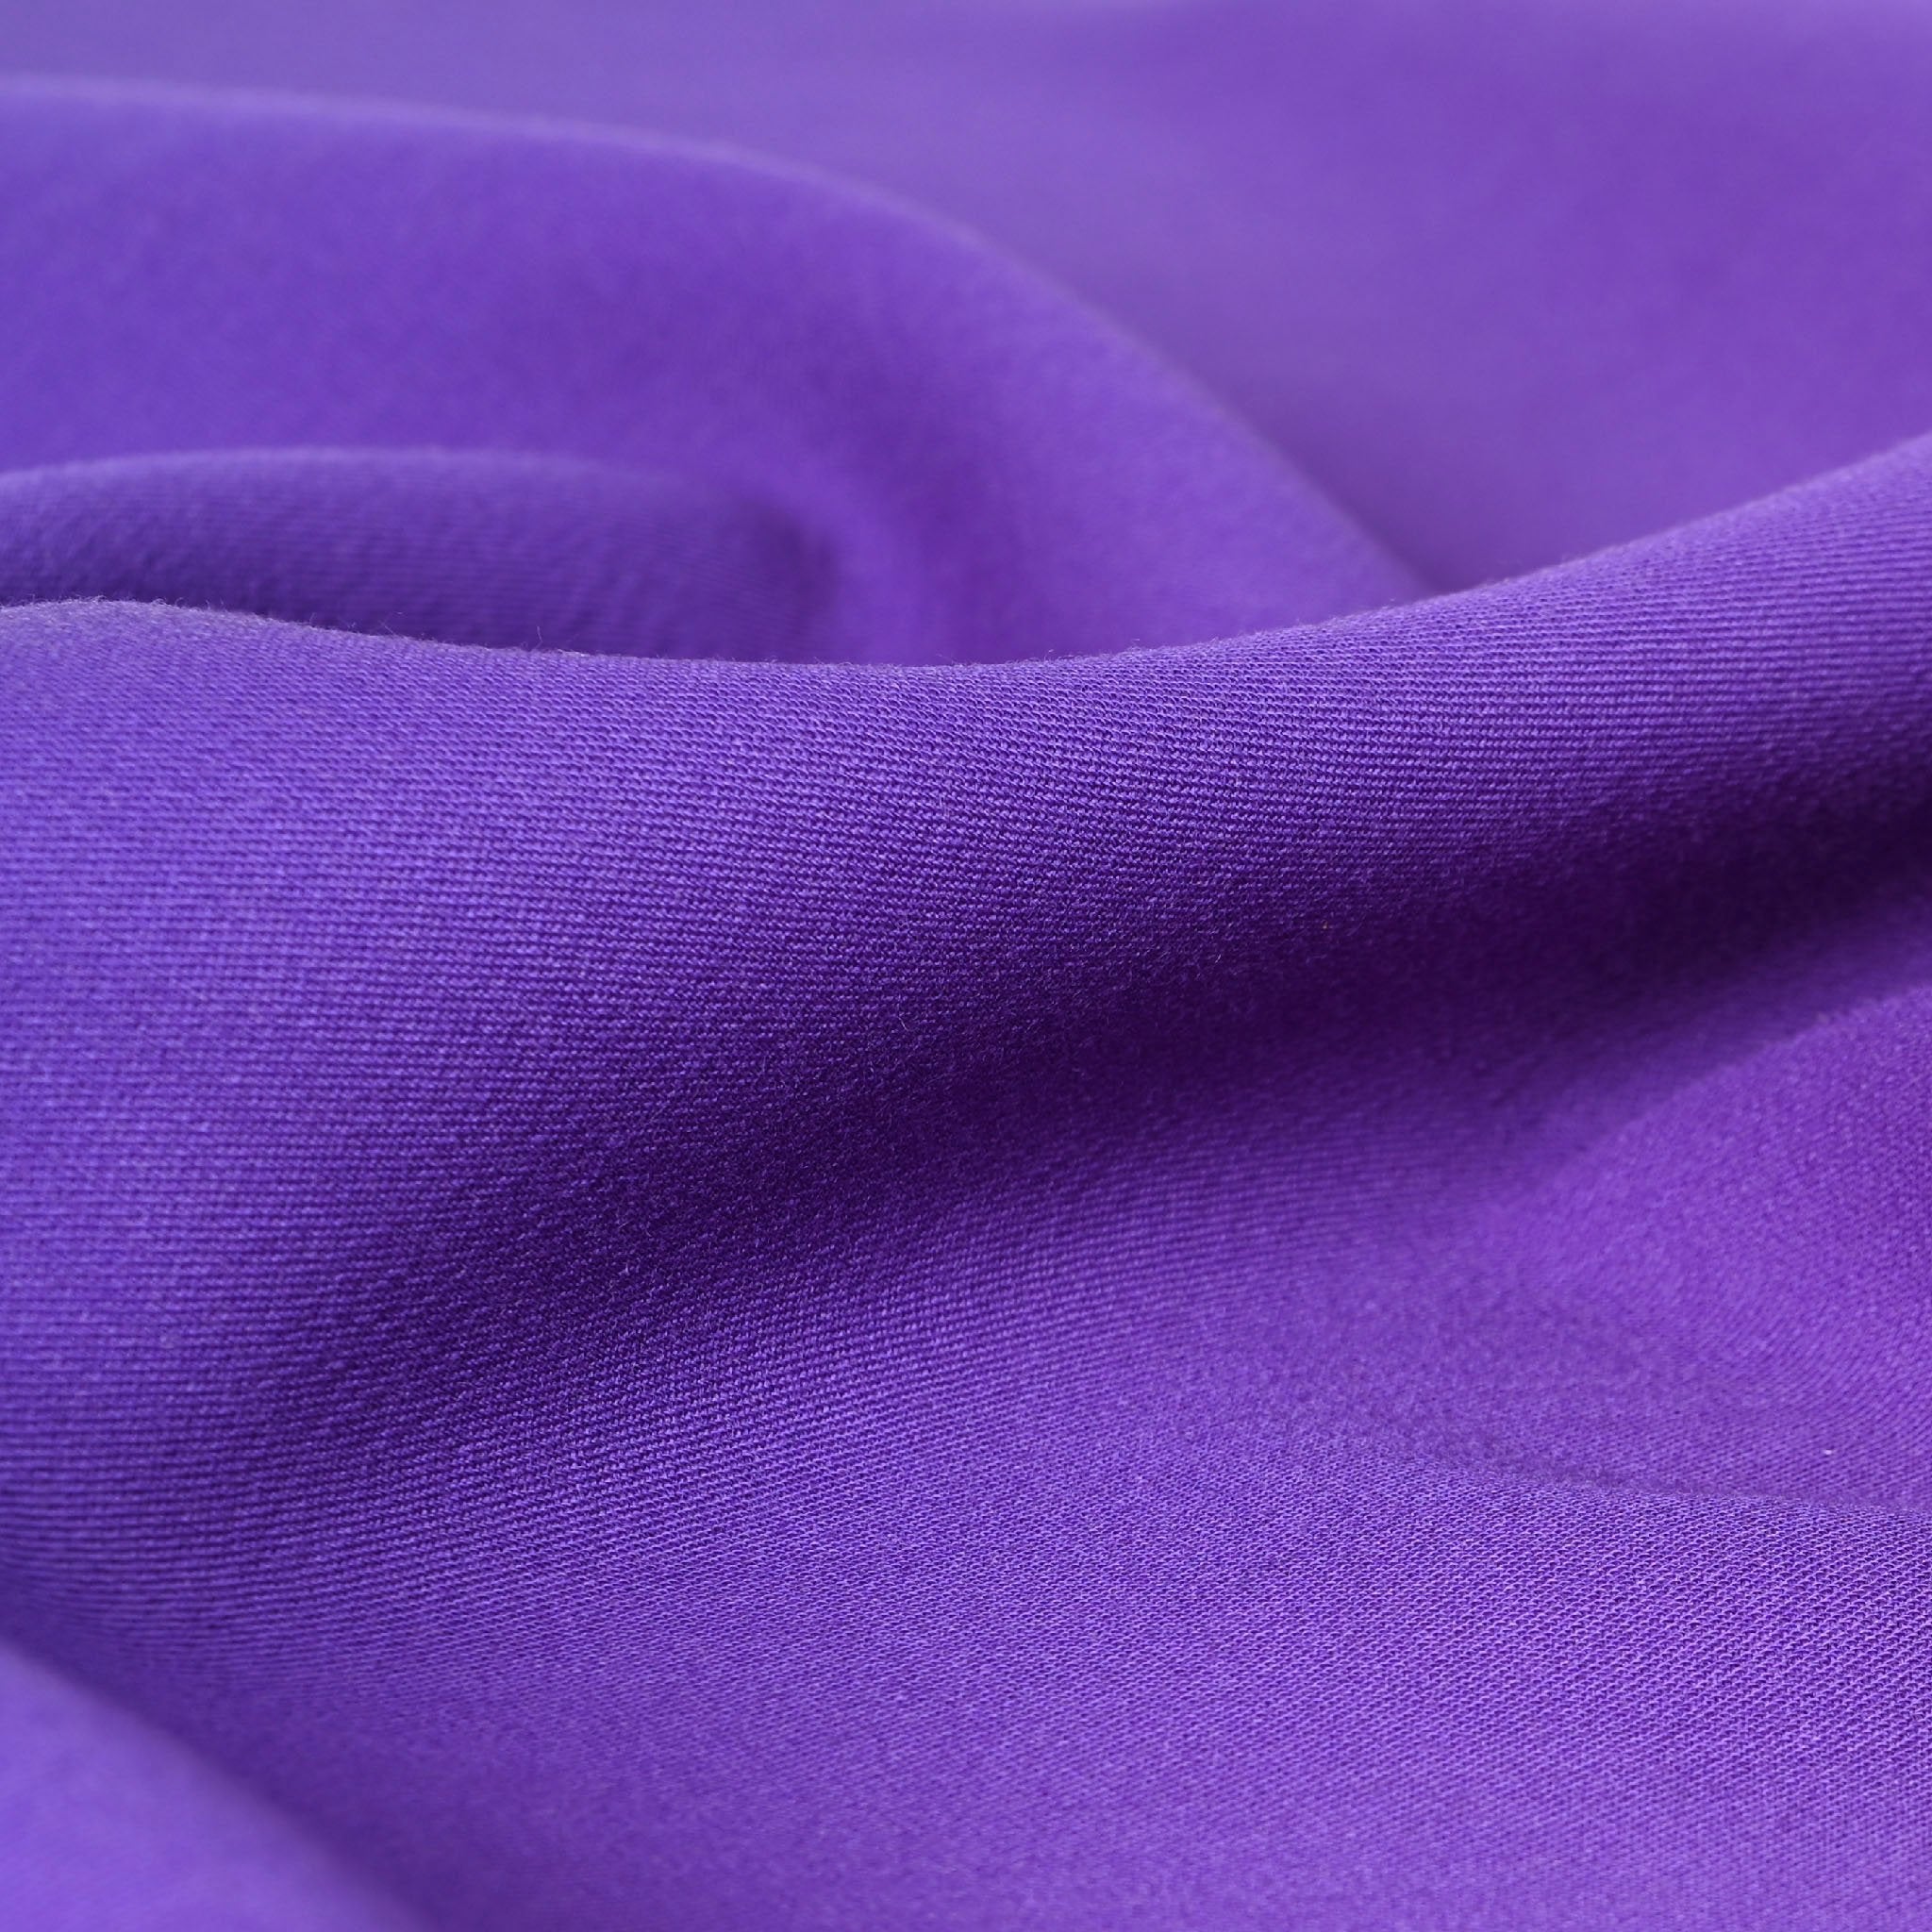 Purple Coating Fabric 2515